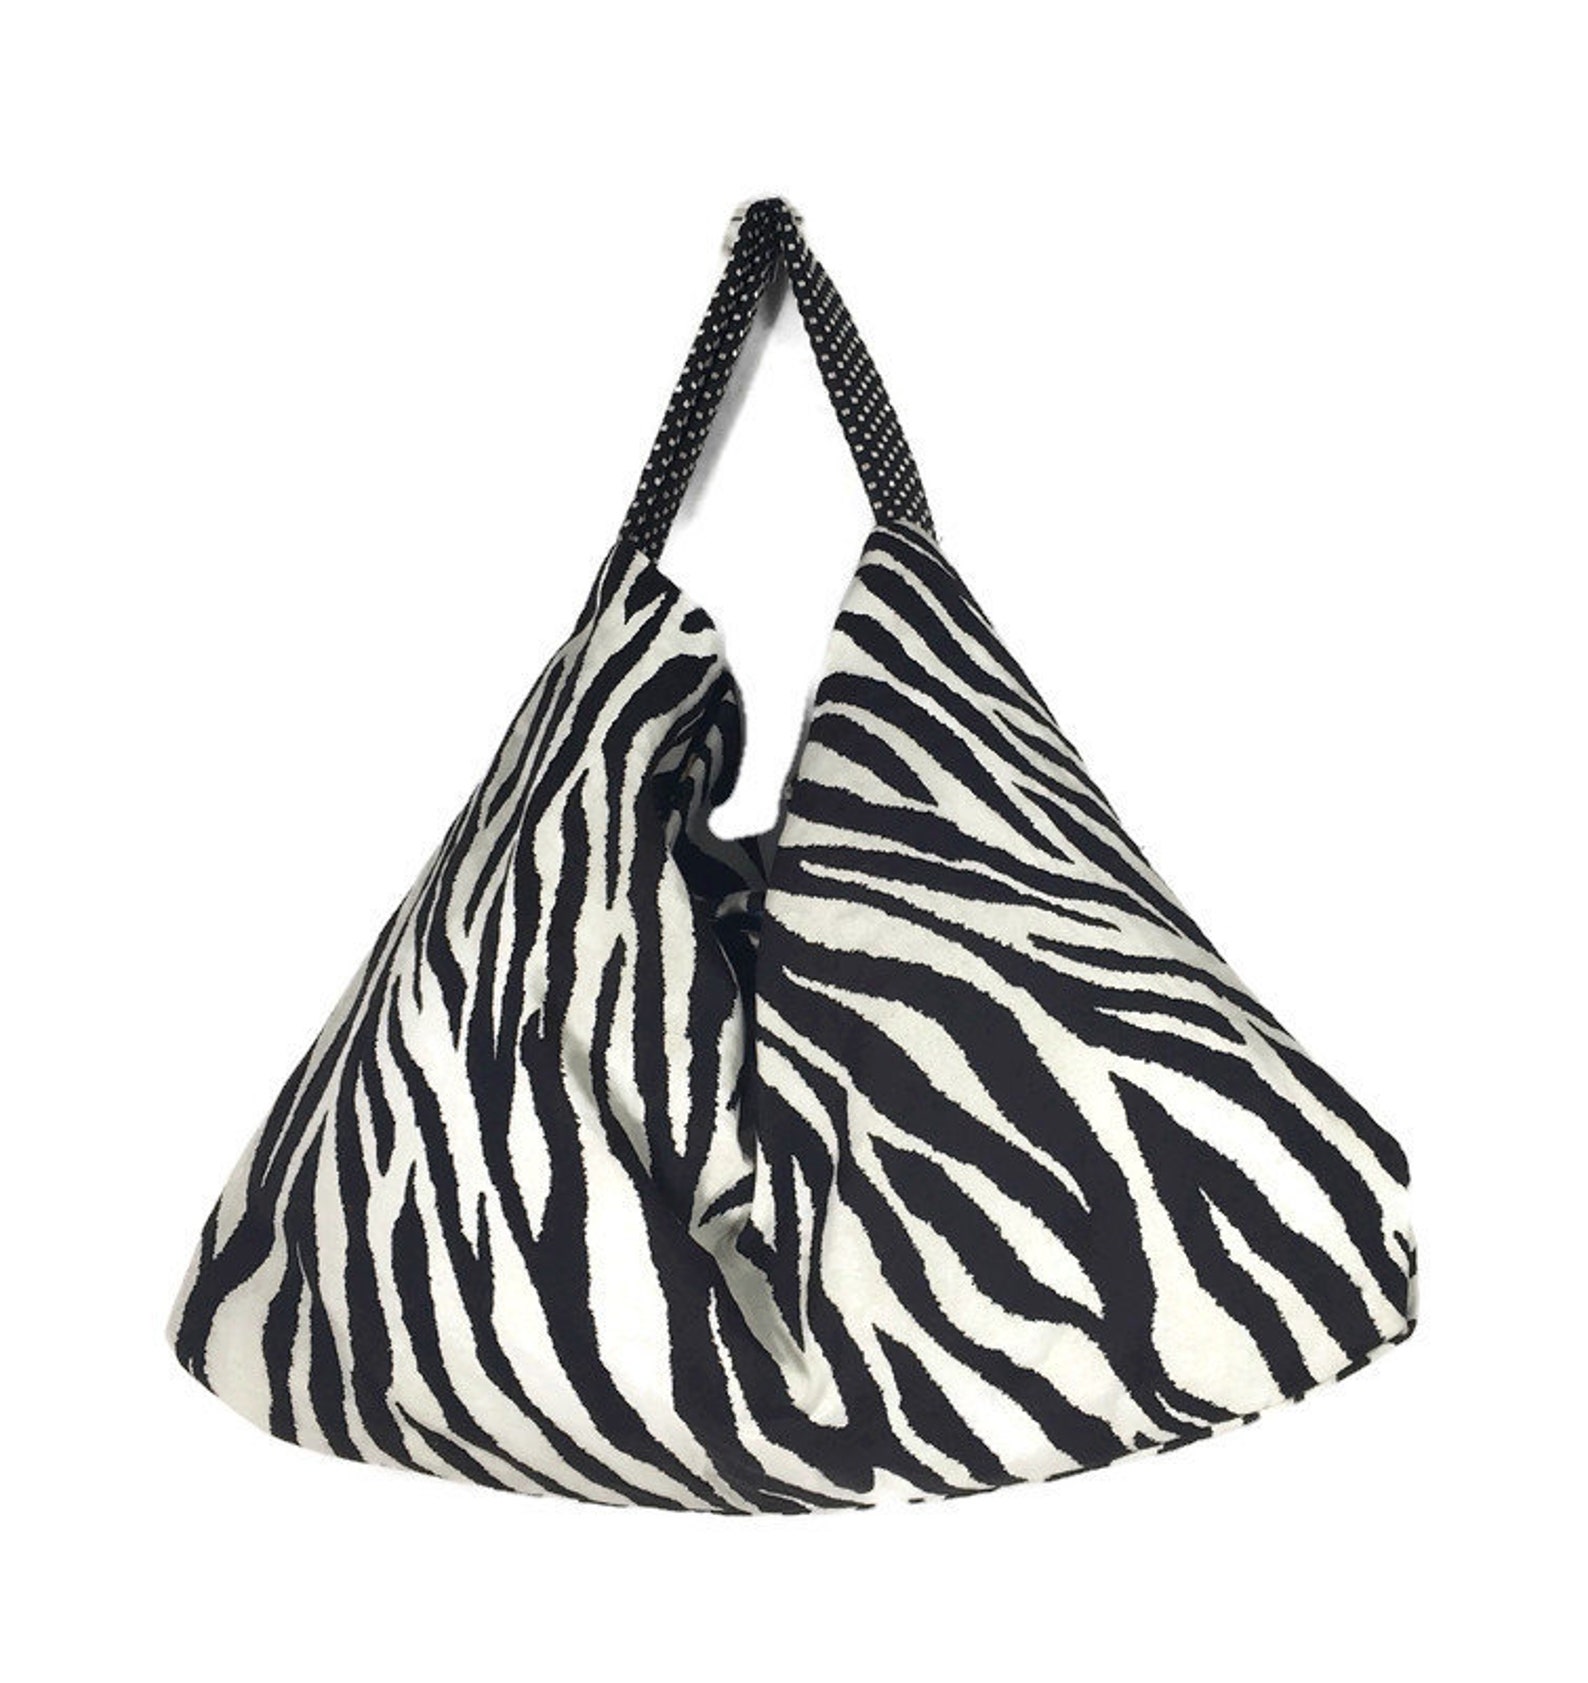 Zebra Print Hobo Bag Black and White Zebra Hobo Bag Large - Etsy